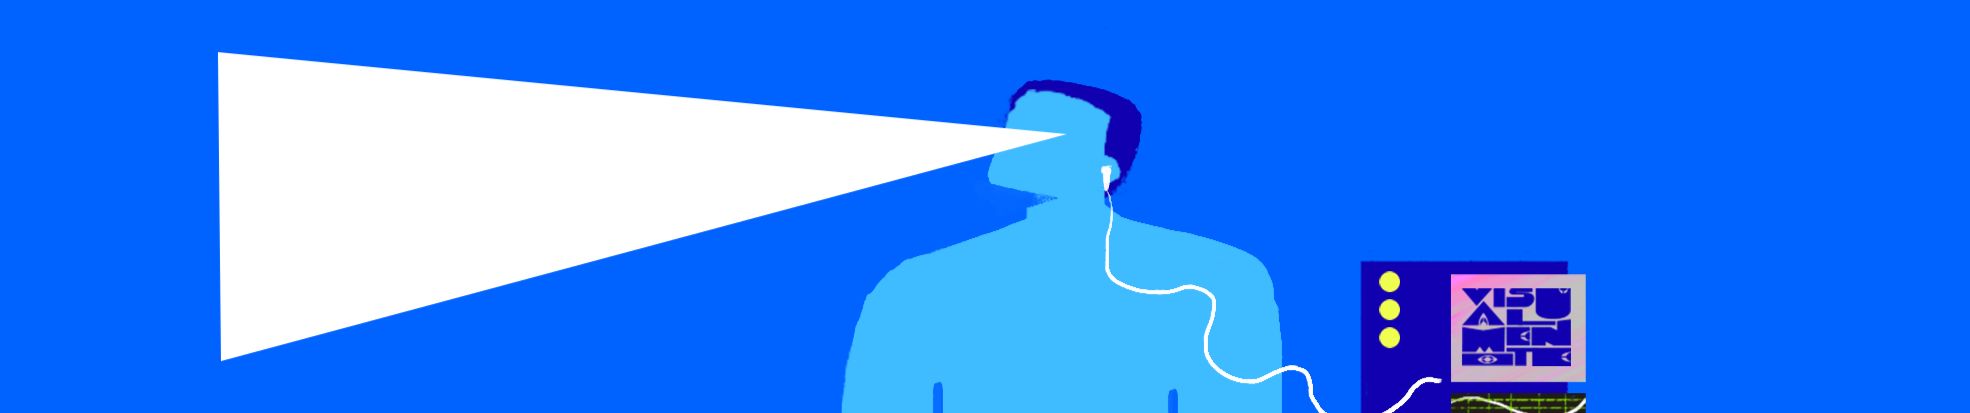 Listen to Visual+mente podcast